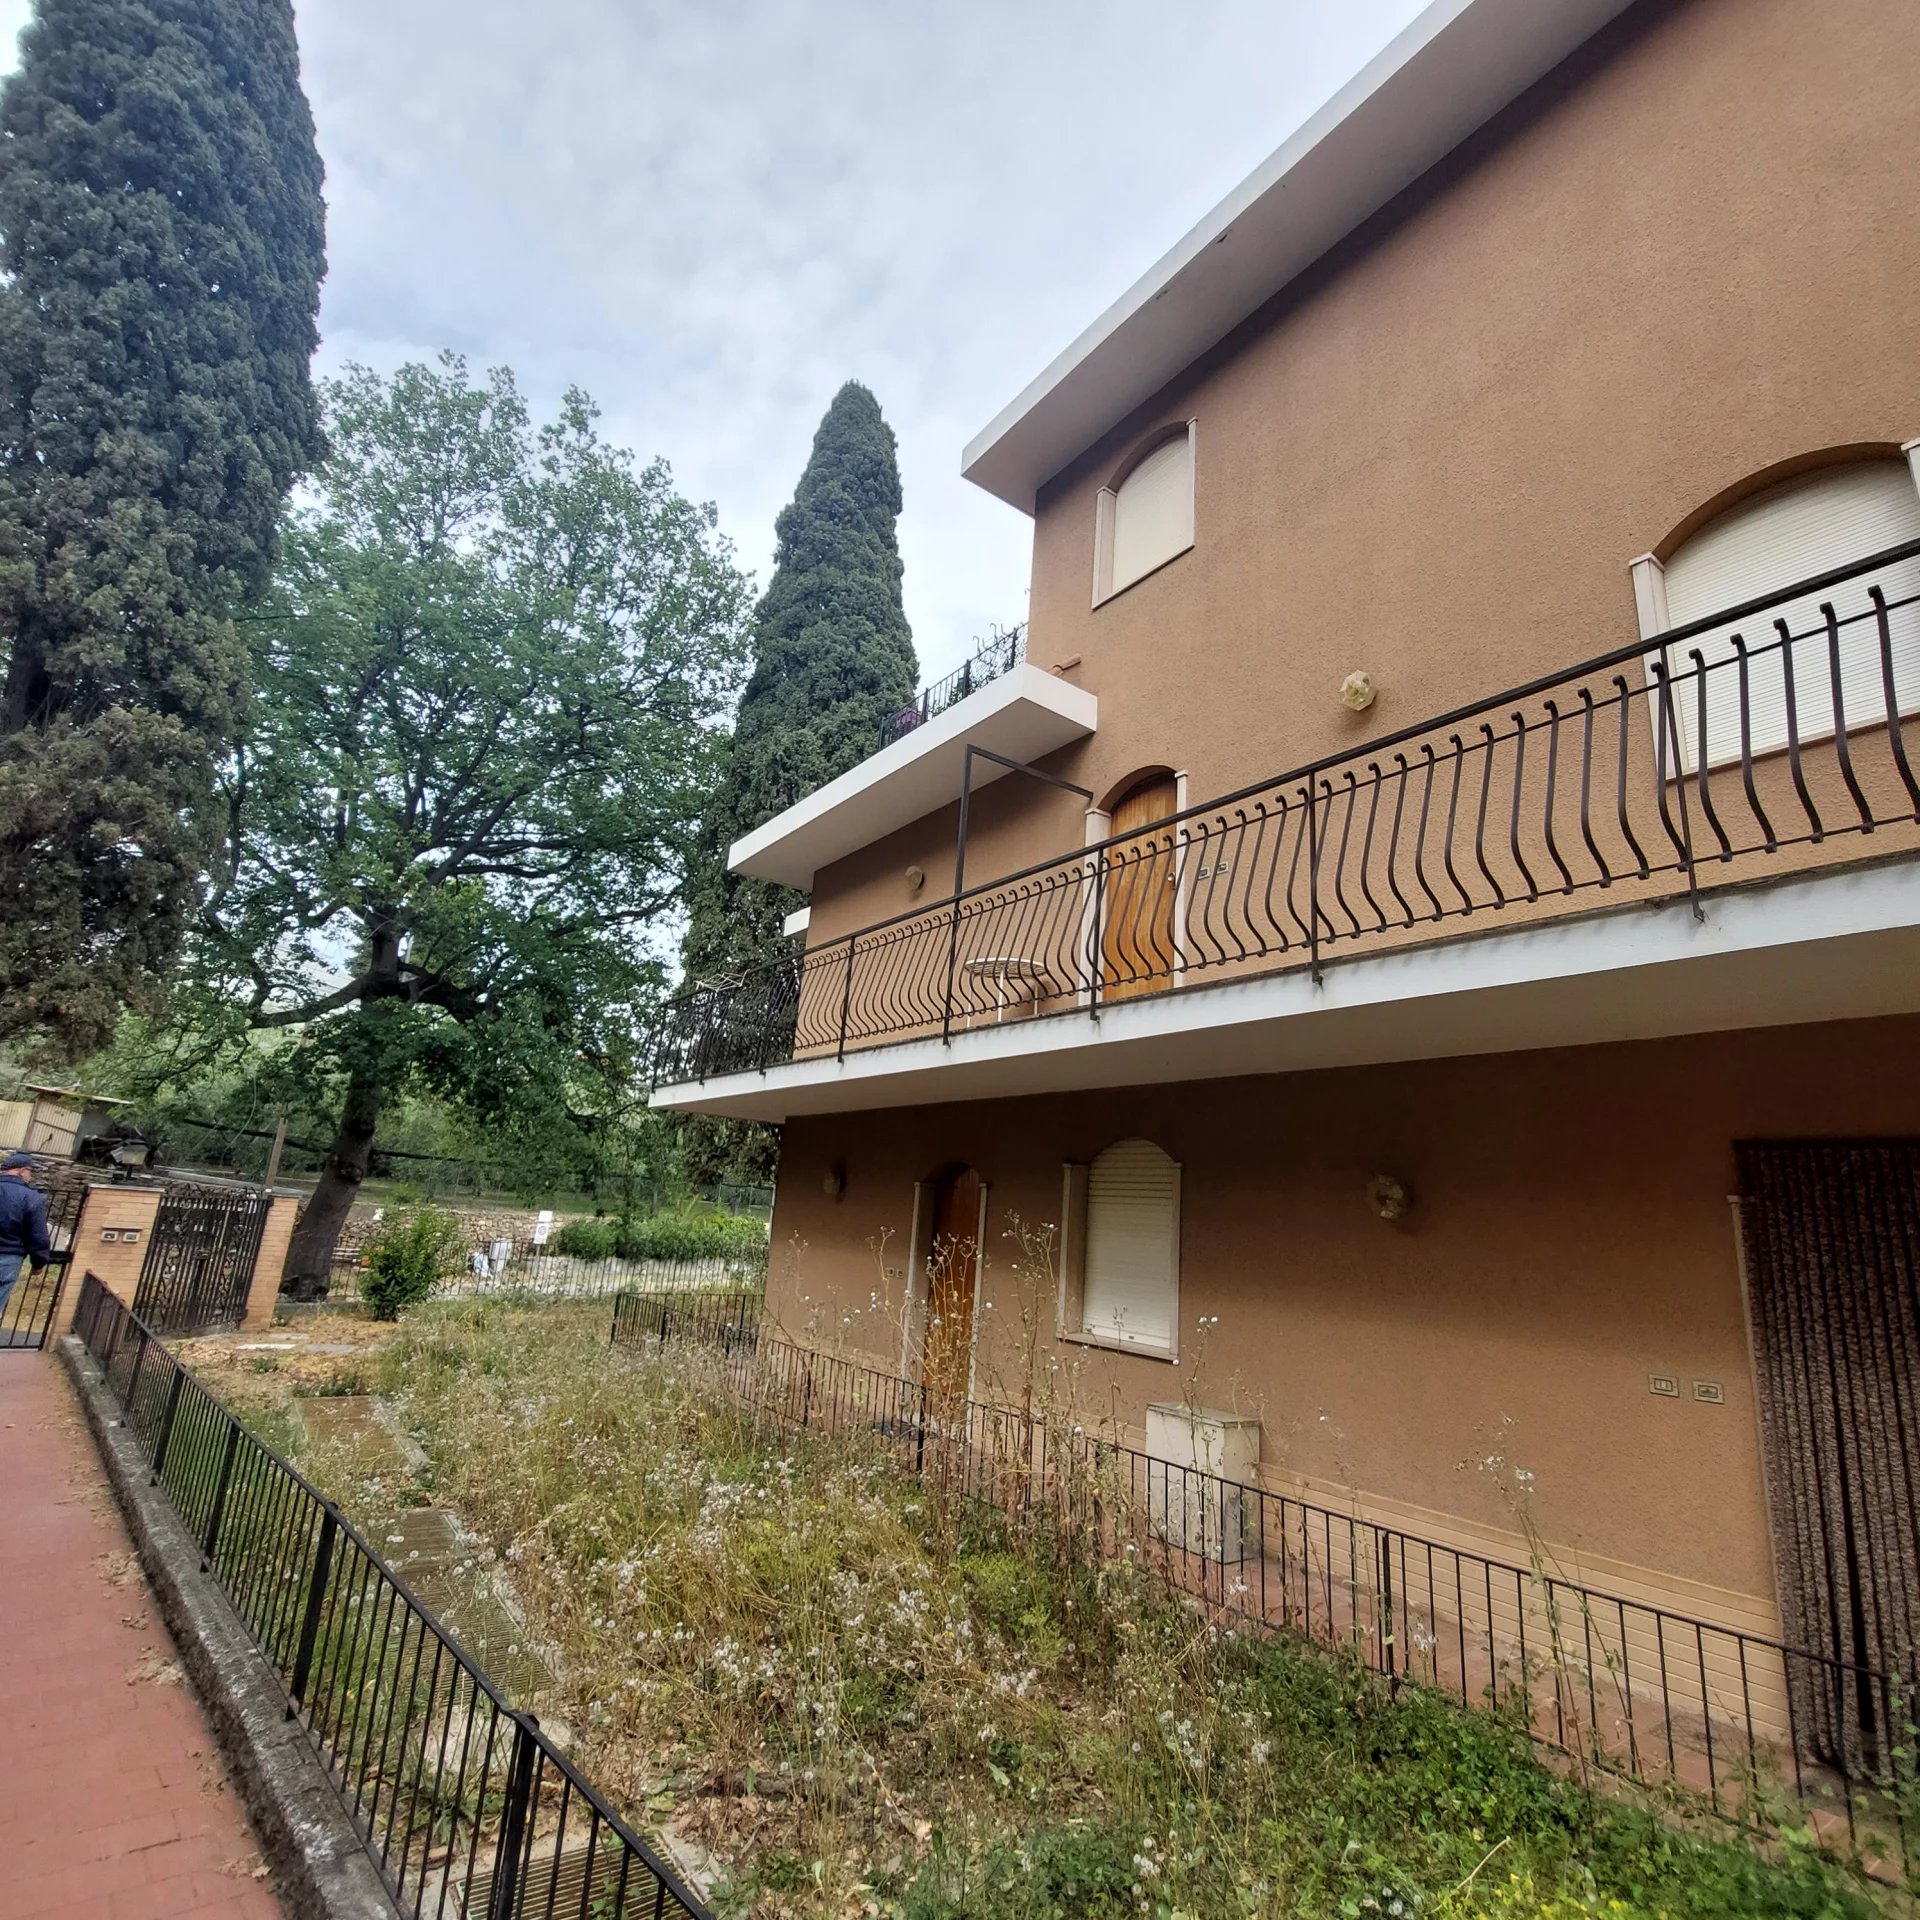 Sale Apartment - Bordighera Due Strade - Italy